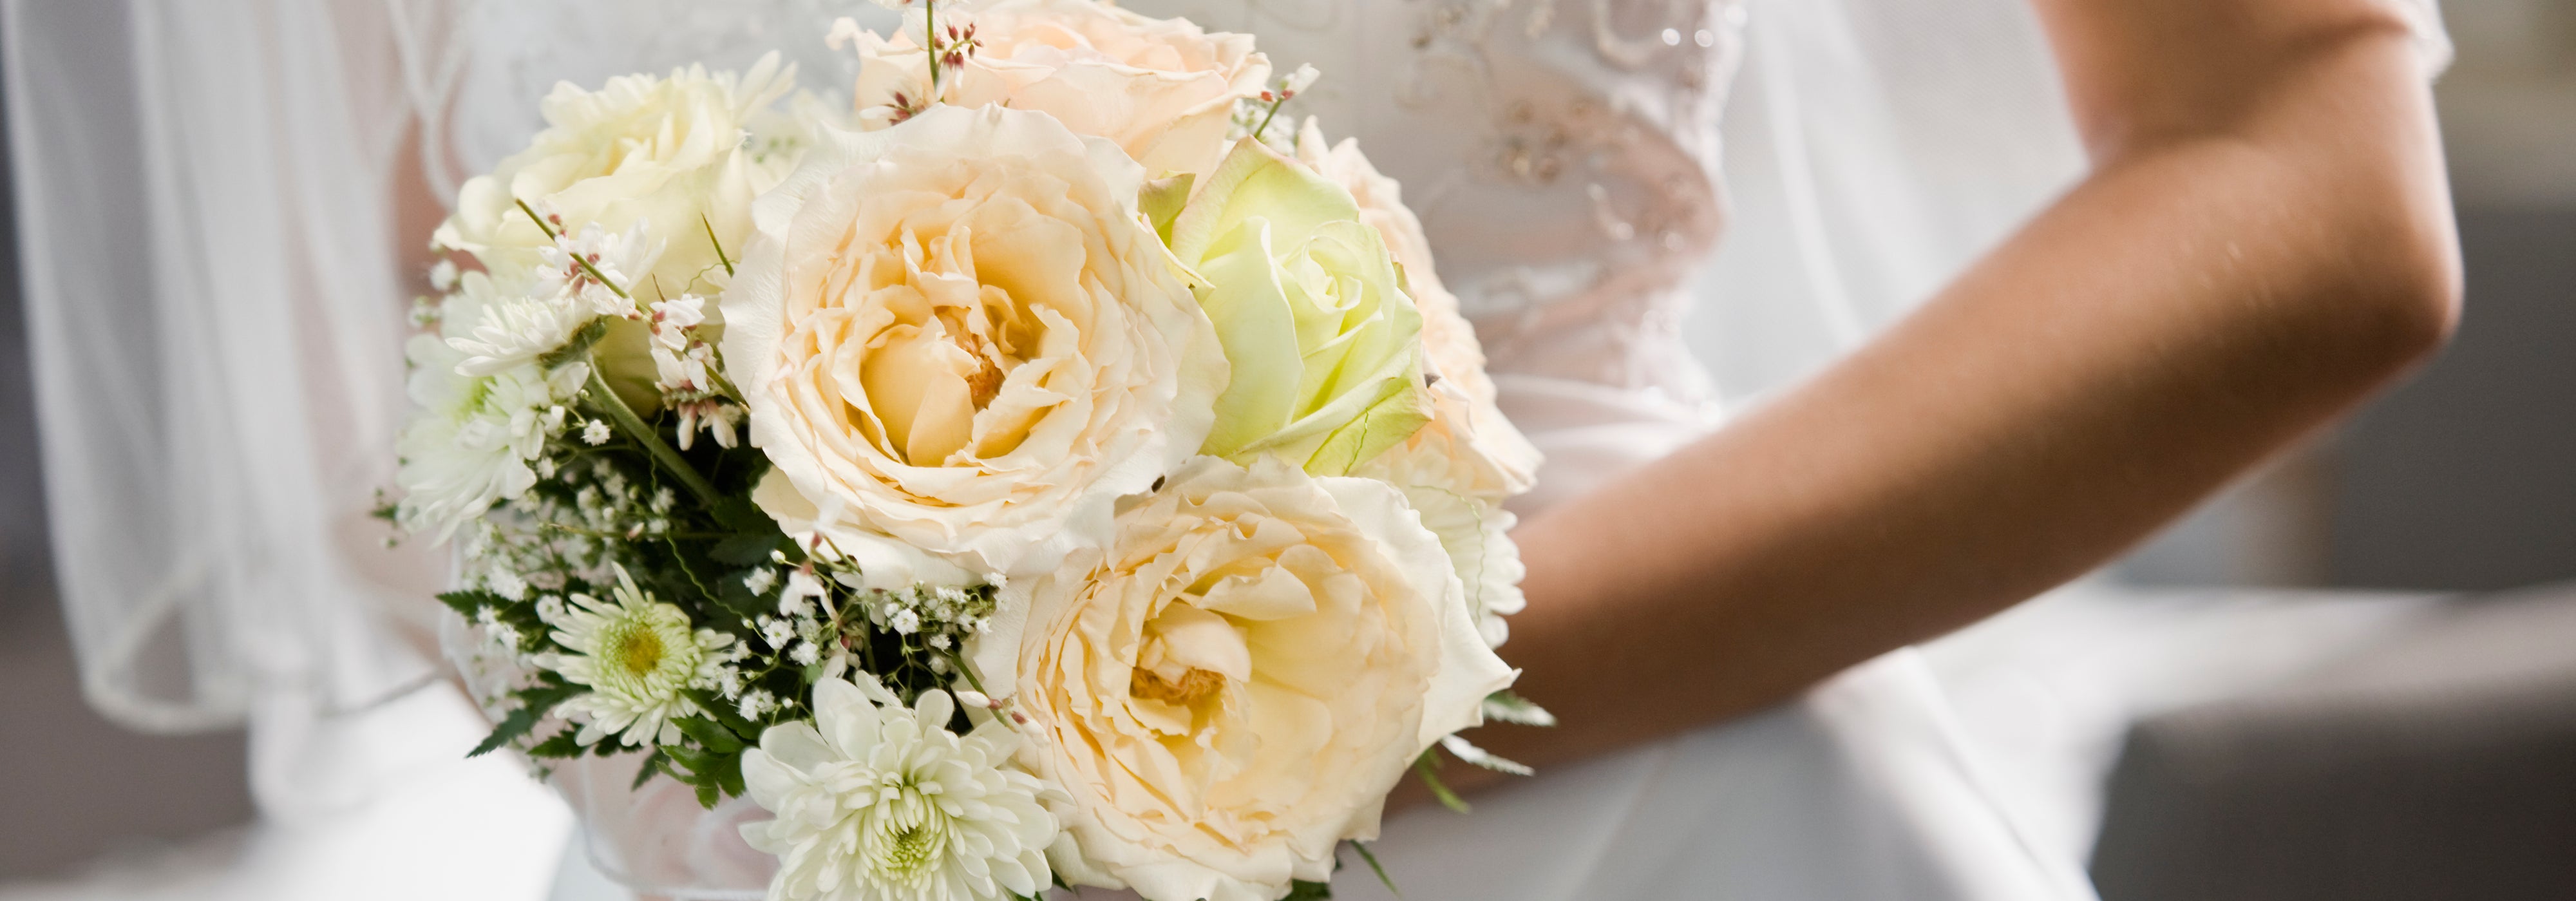 closeup of a bouquet